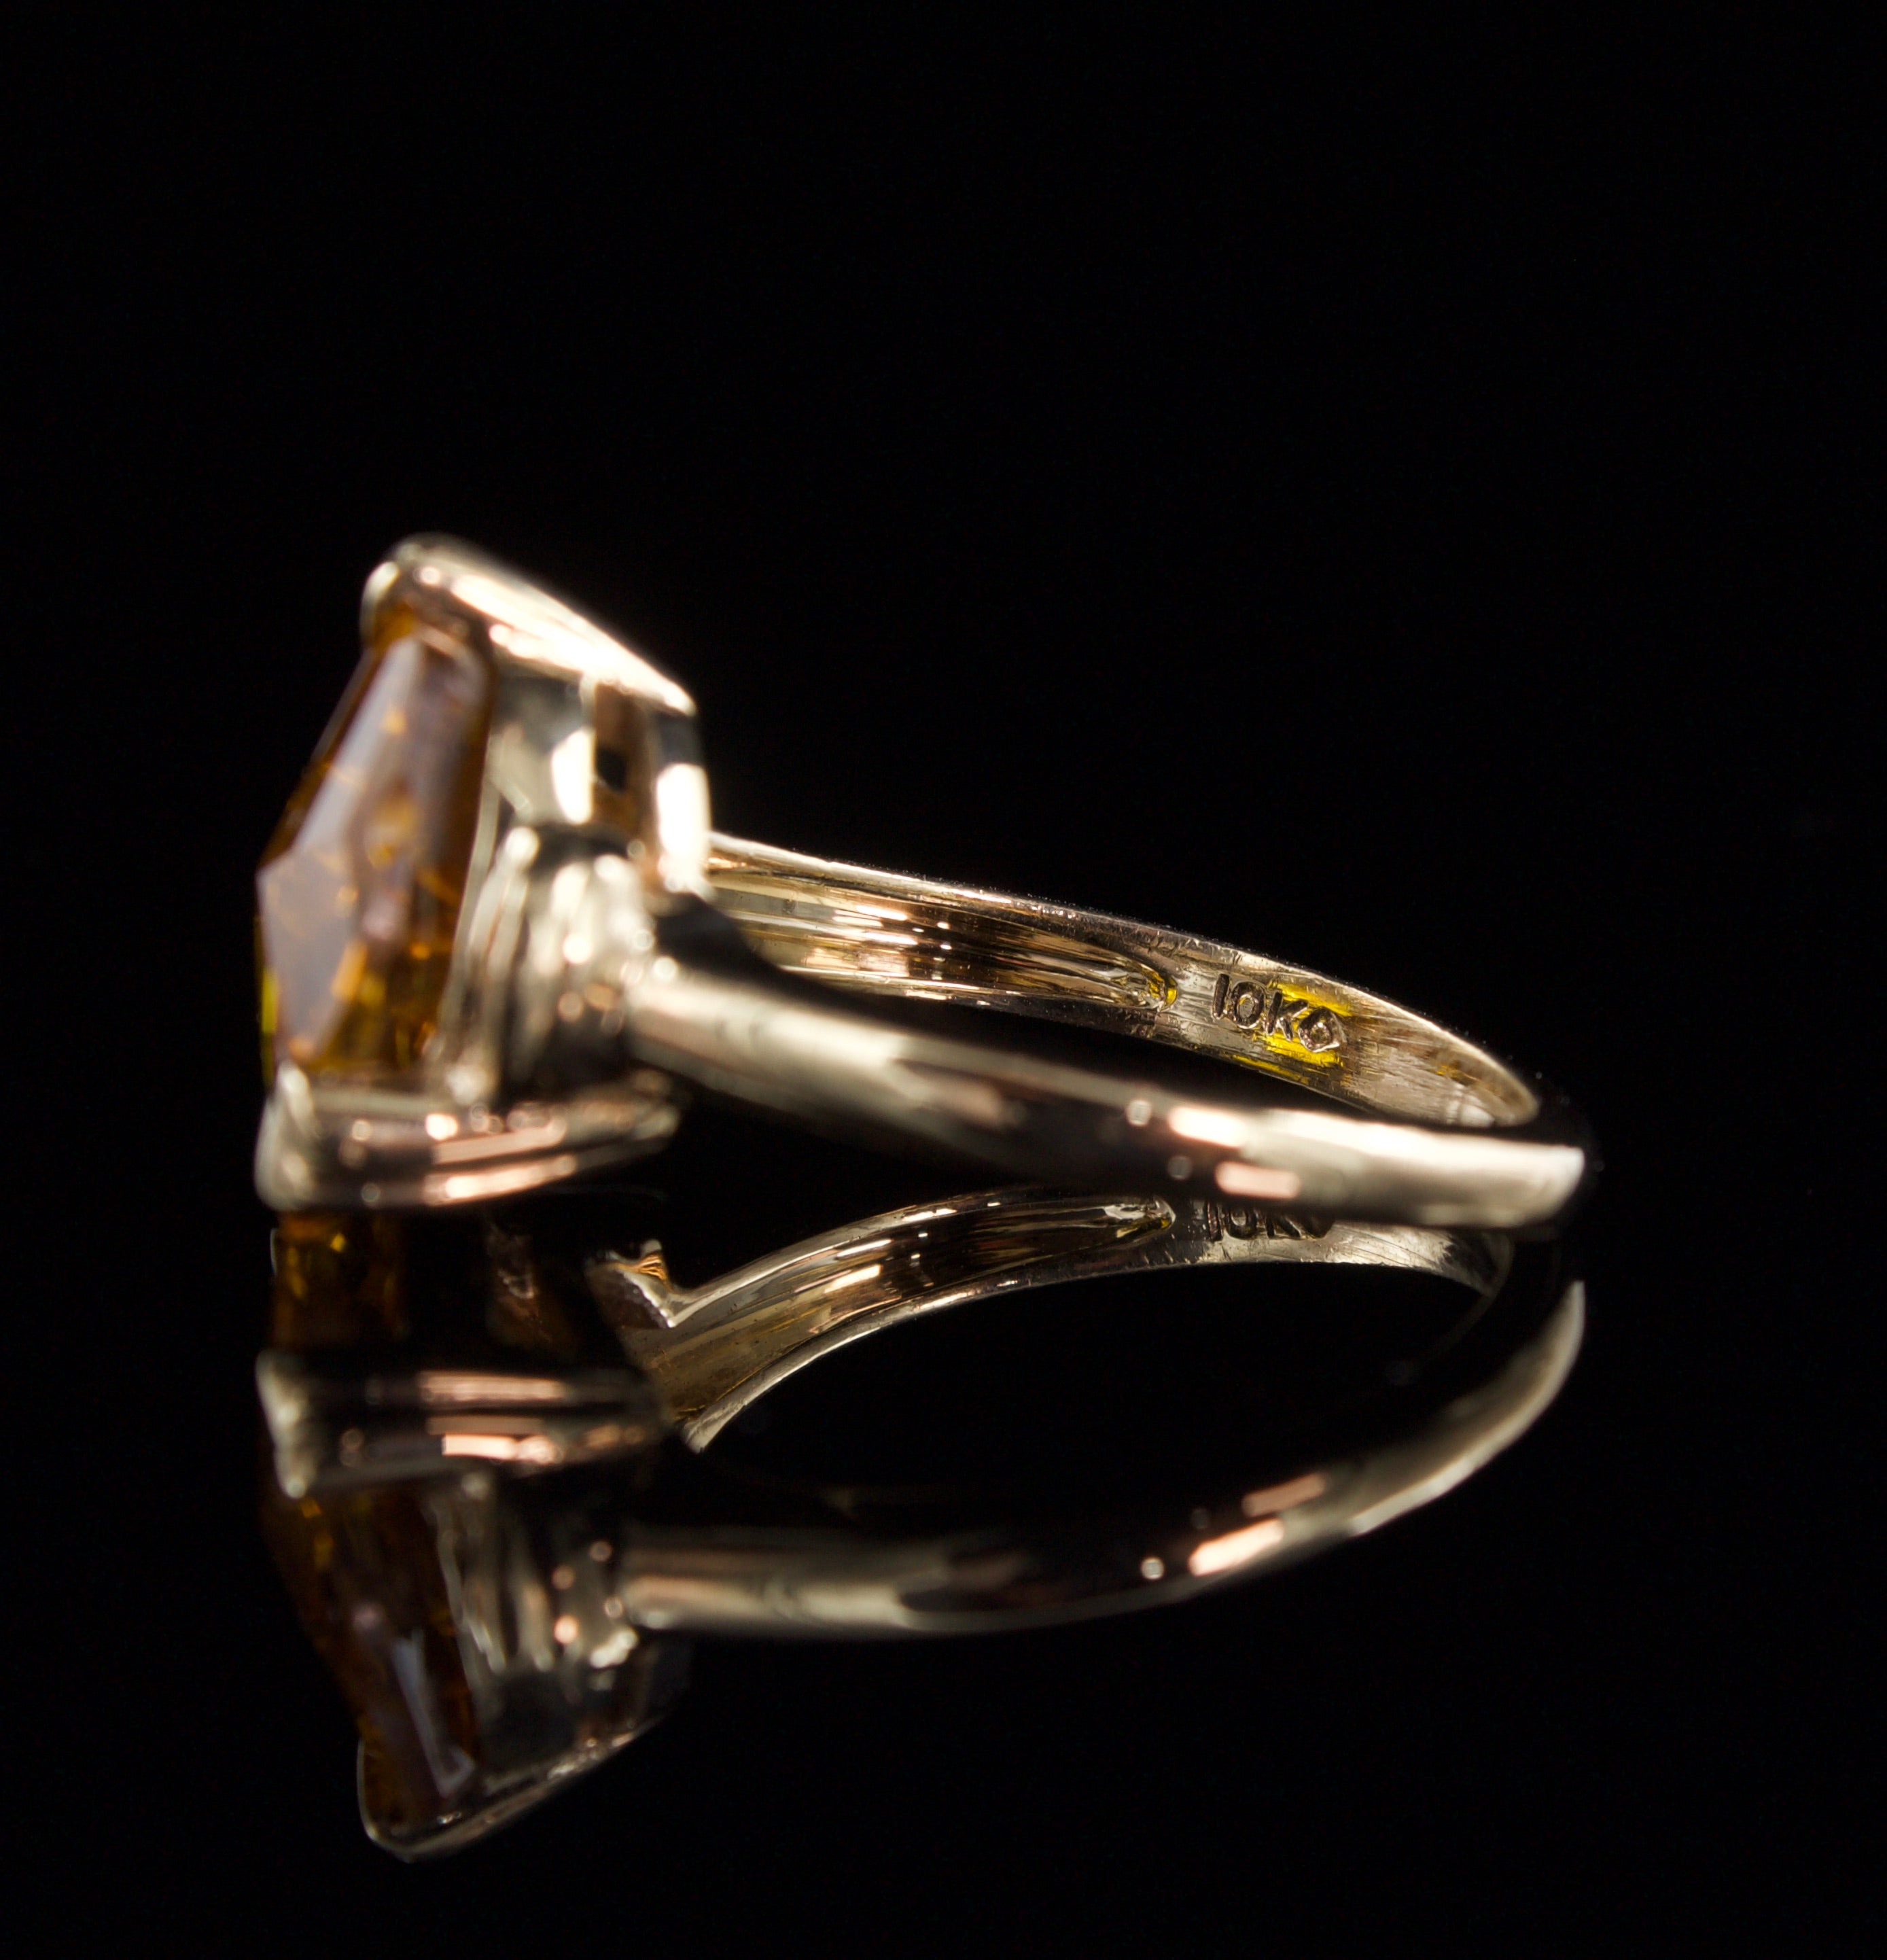 Vintage Fancy Cut Orange Sapphire Ring In 10 Karat Gold